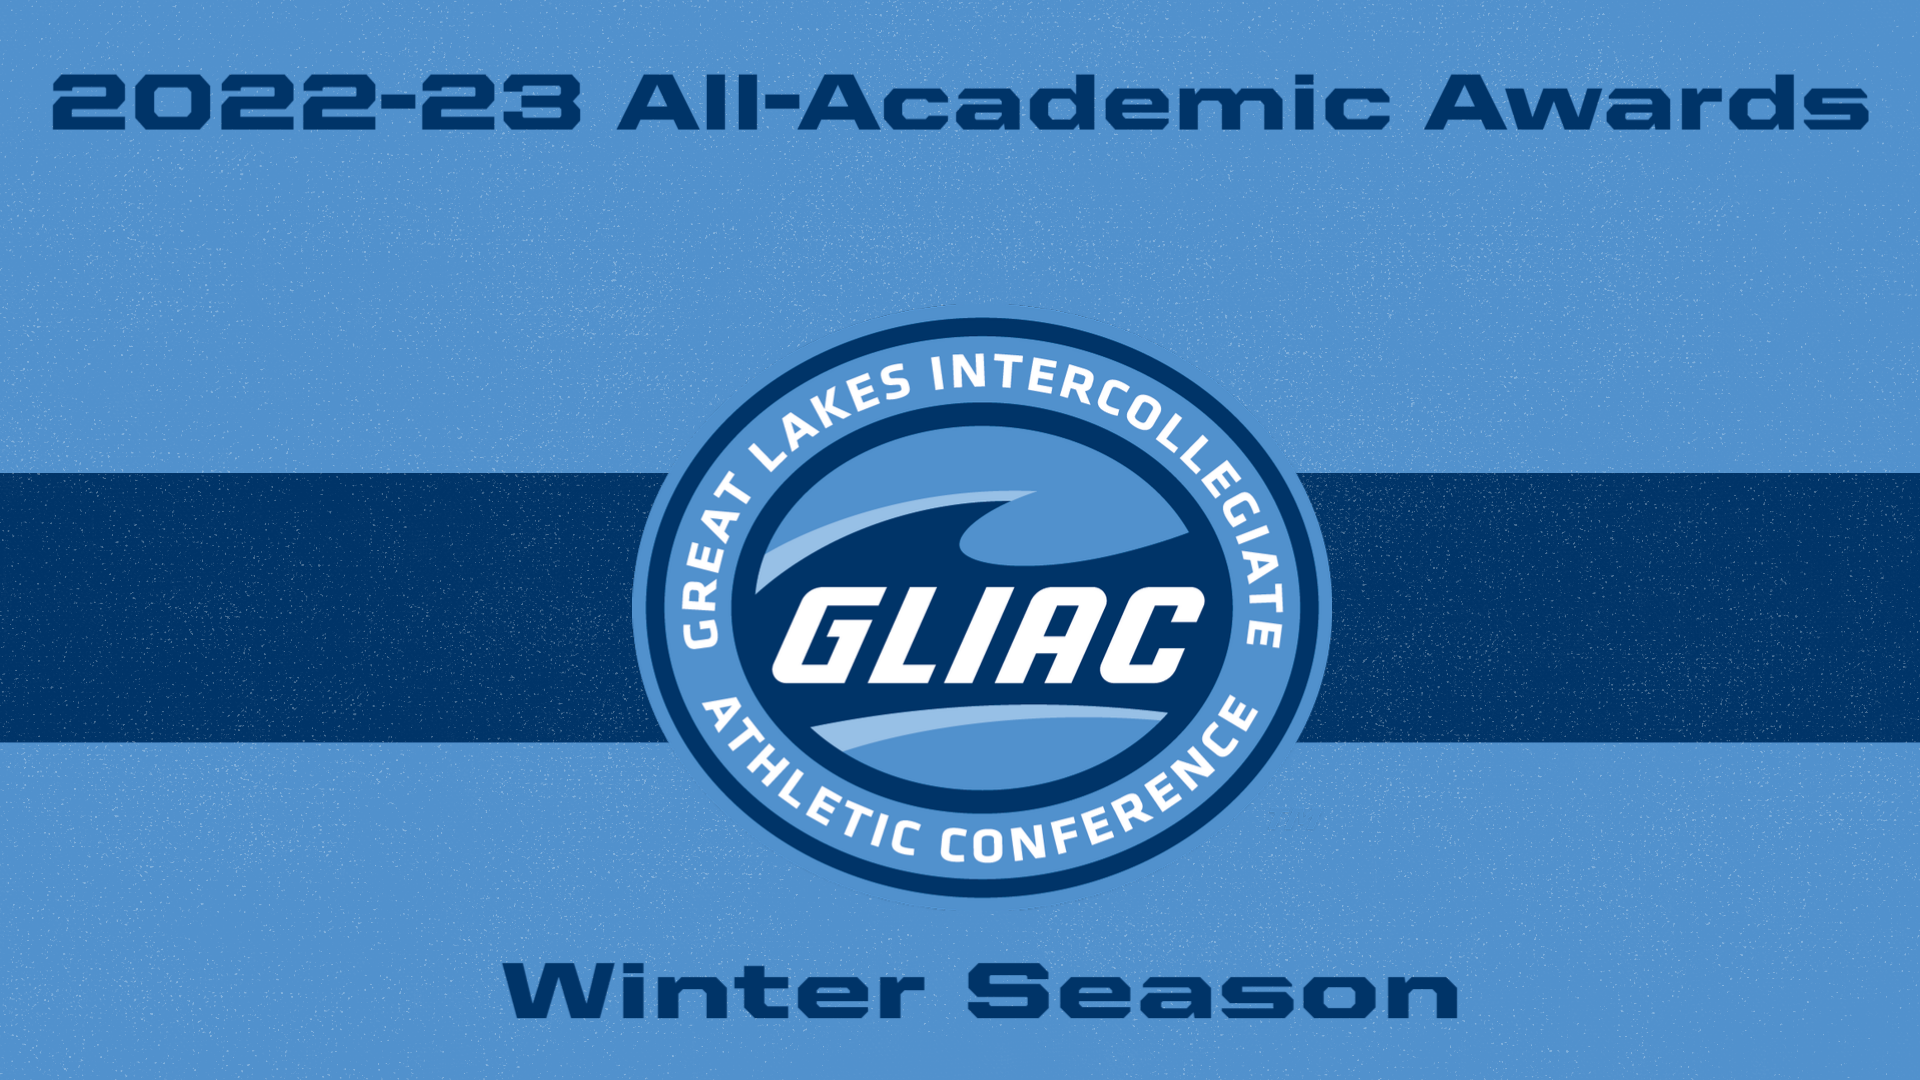 79 SVSU Winter Student-Athletes Earn GLIAC All-Academic Honors